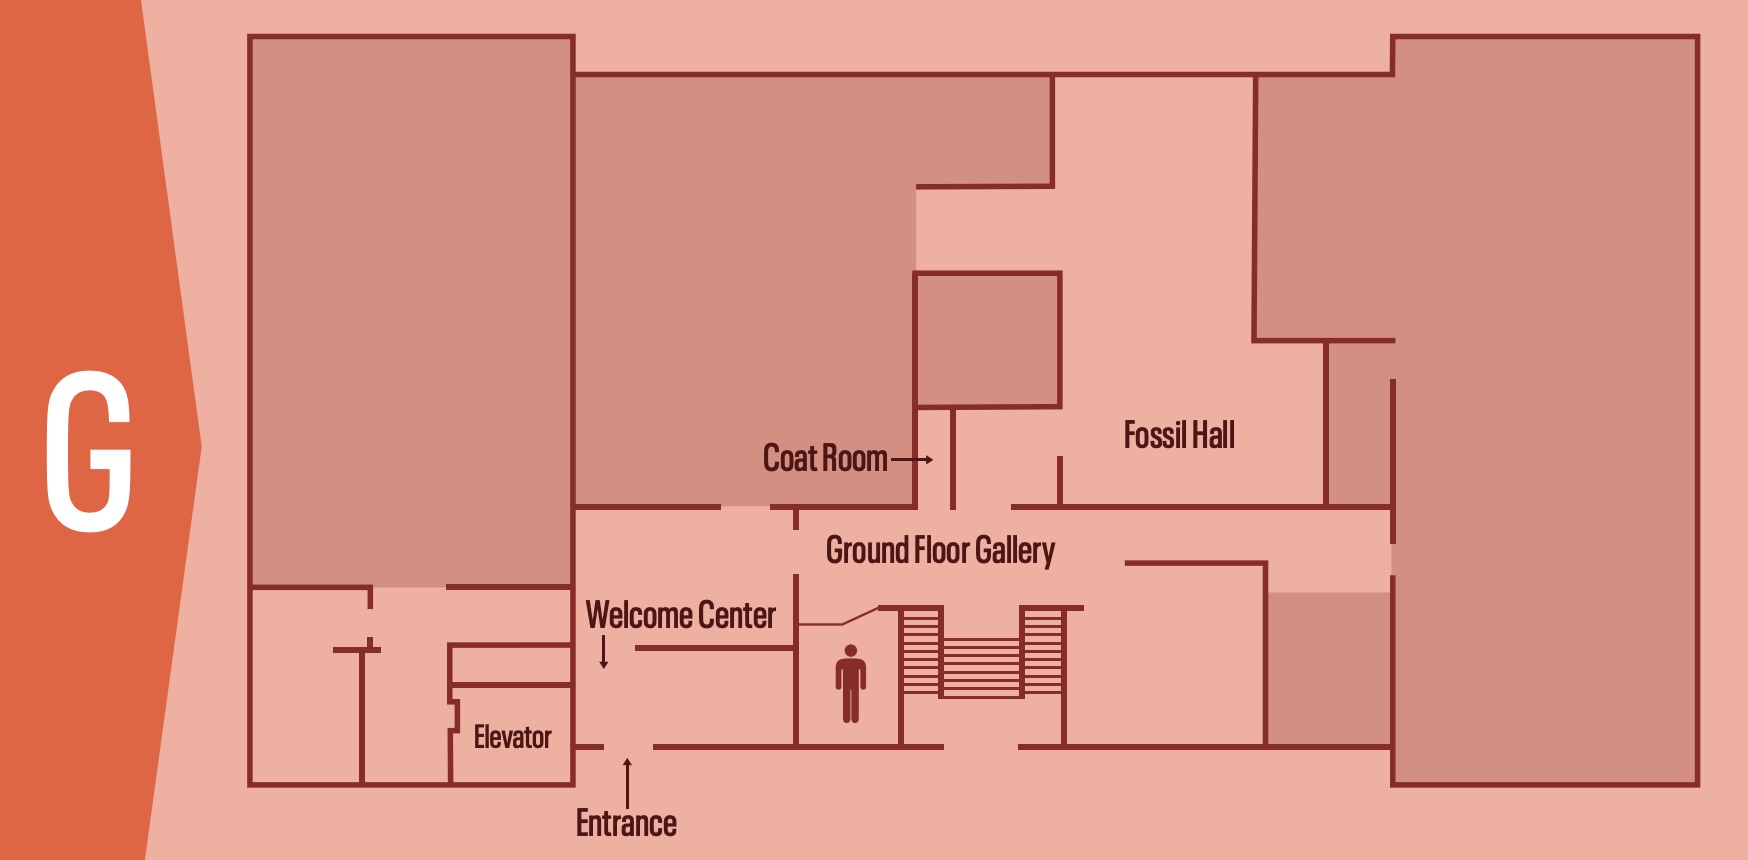 MSU Museum Map - Ground Floor